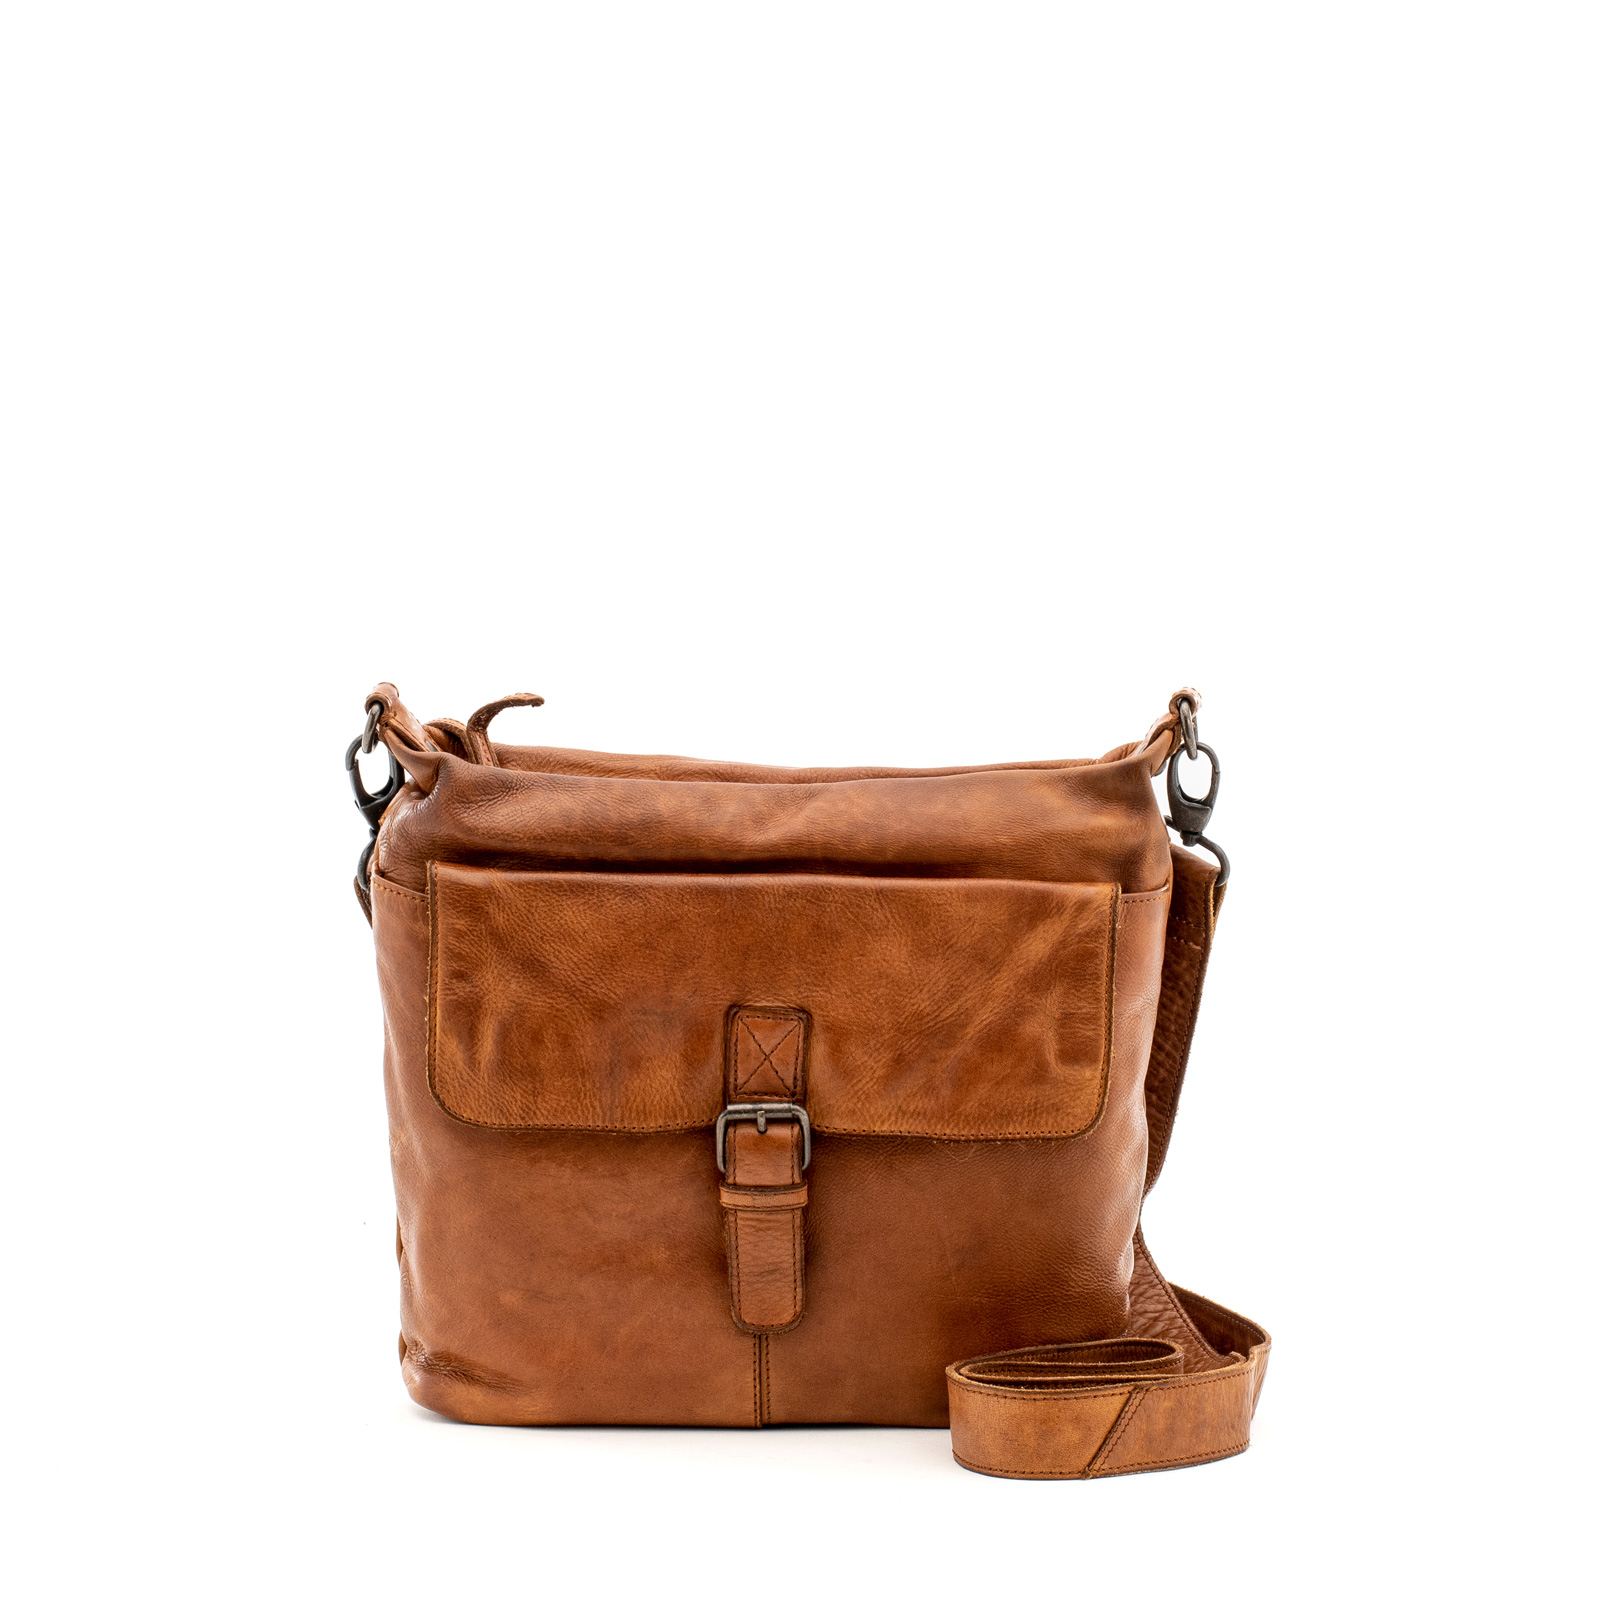 Gianni Conti Medium Soft Italian Leather Tan Crossbody Bag 4202745